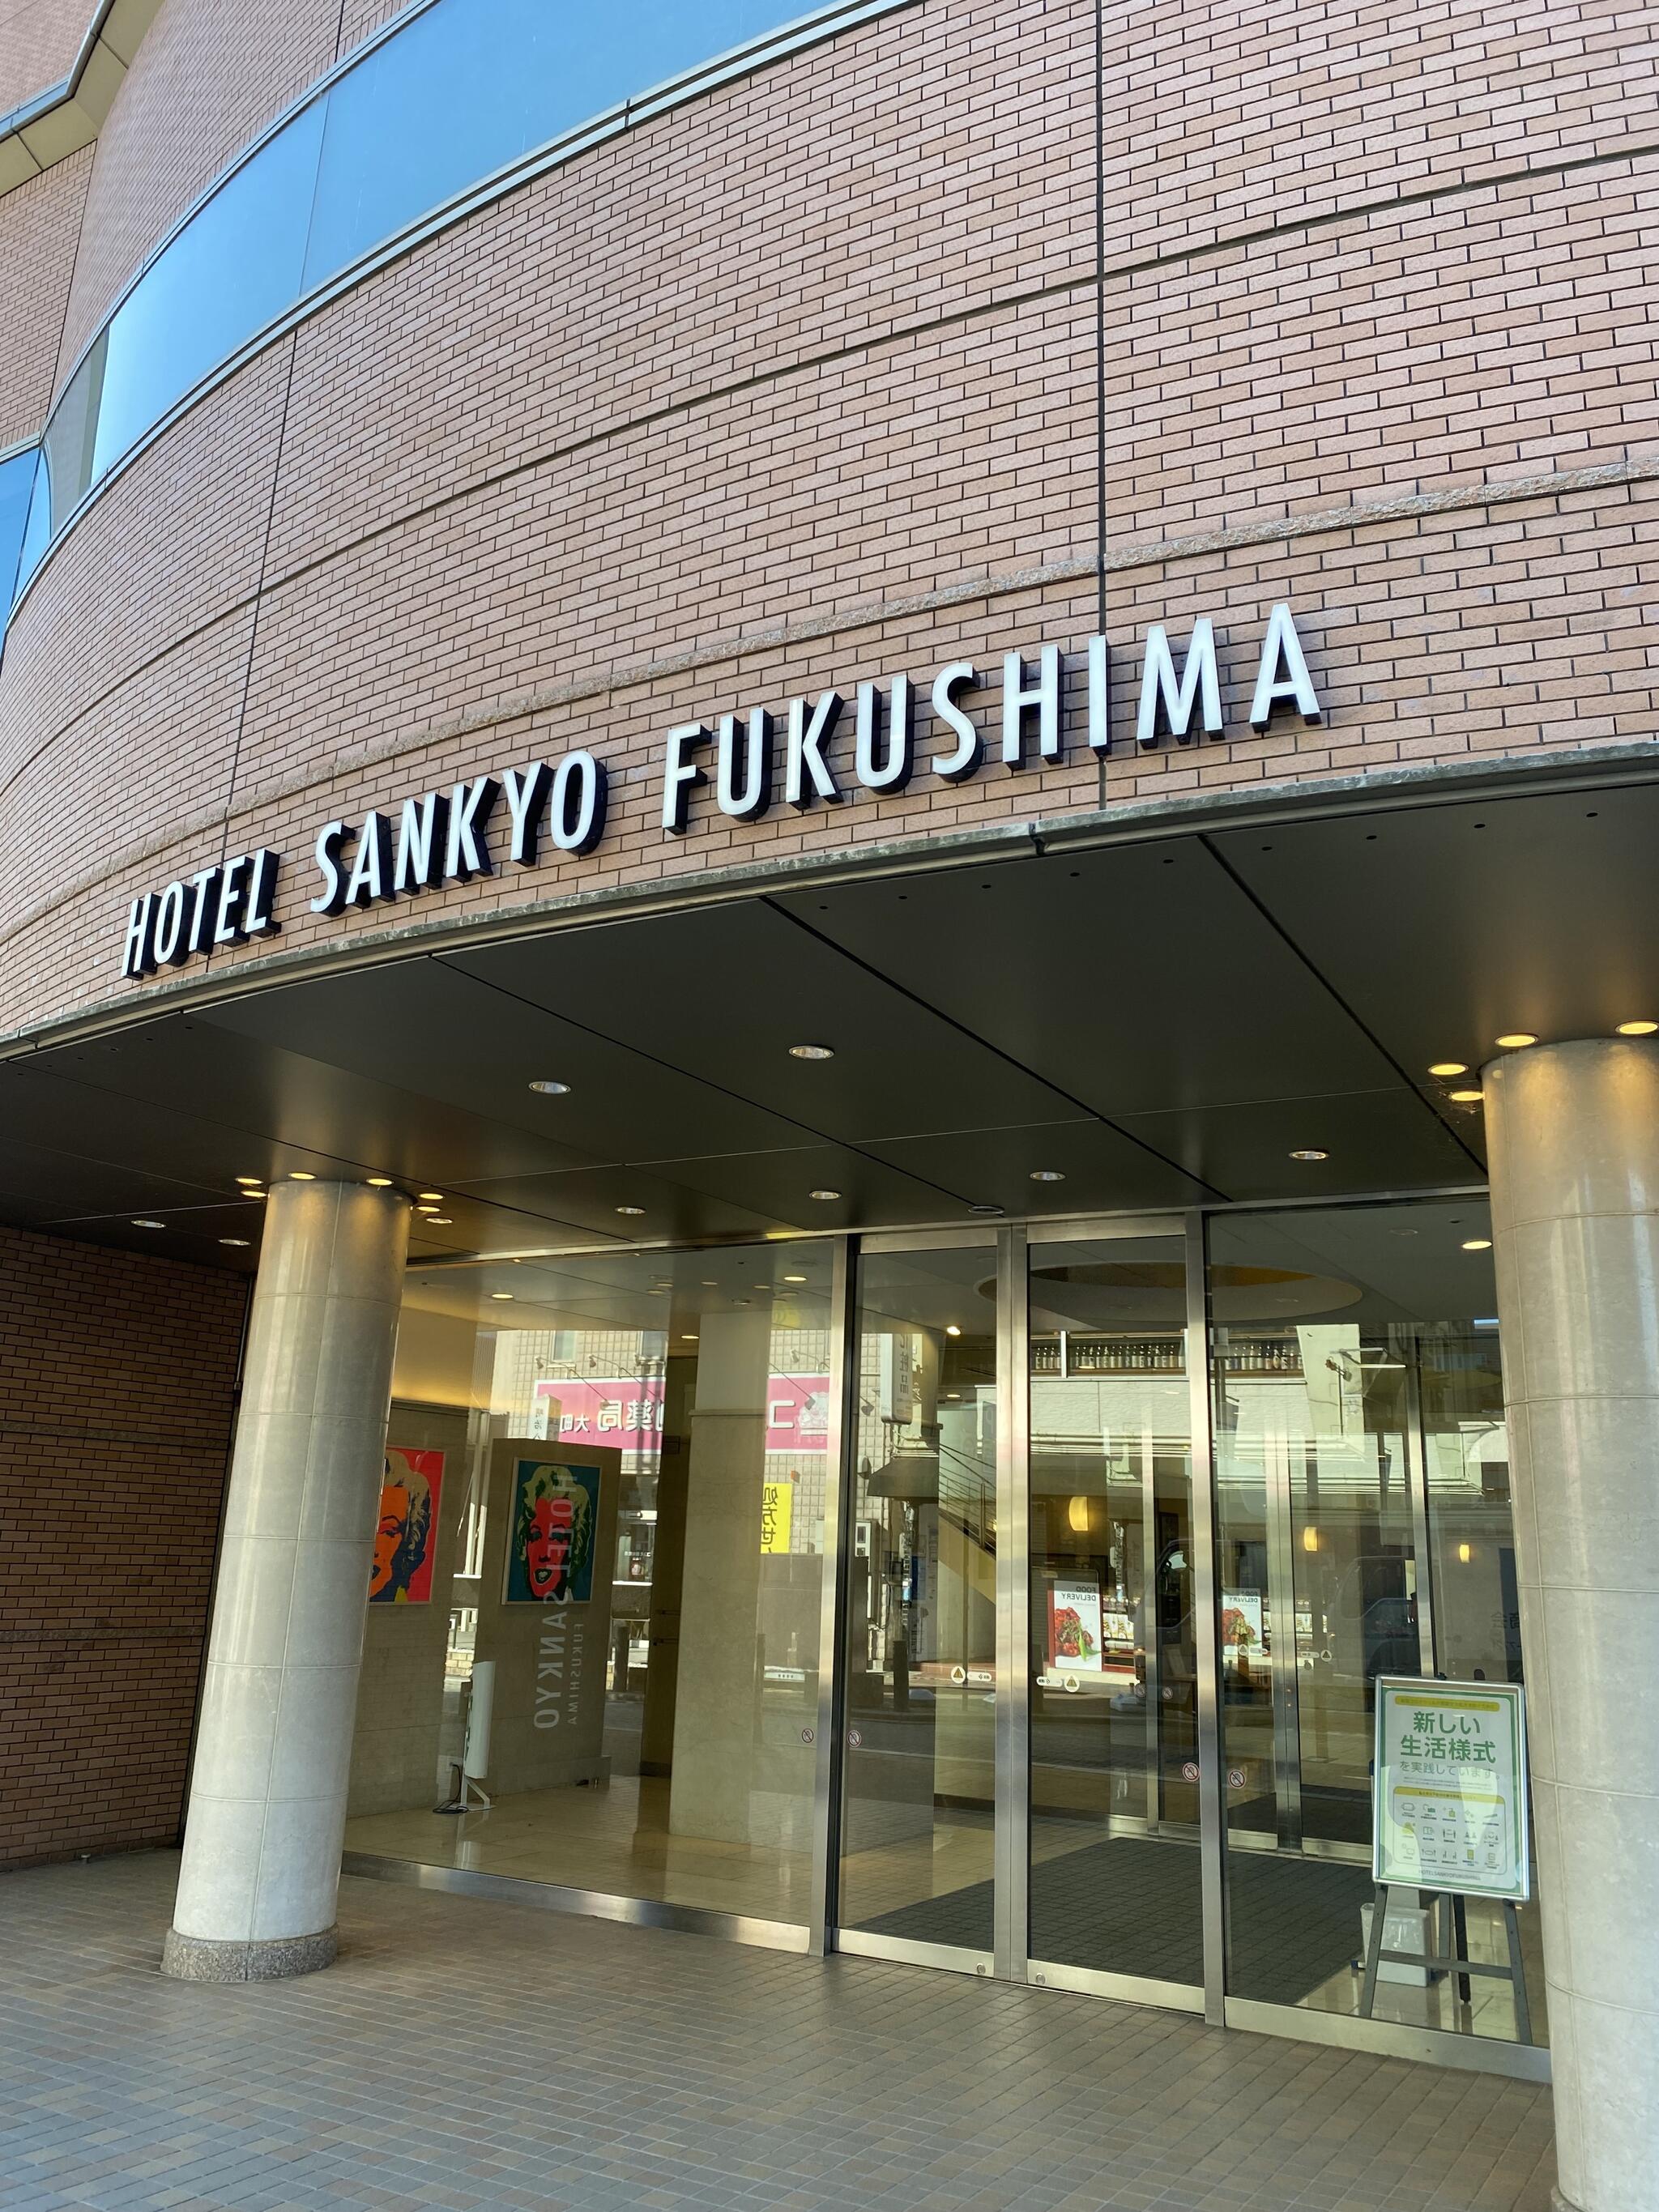 HOTEL SANKYO FUKUSHIMAの代表写真10